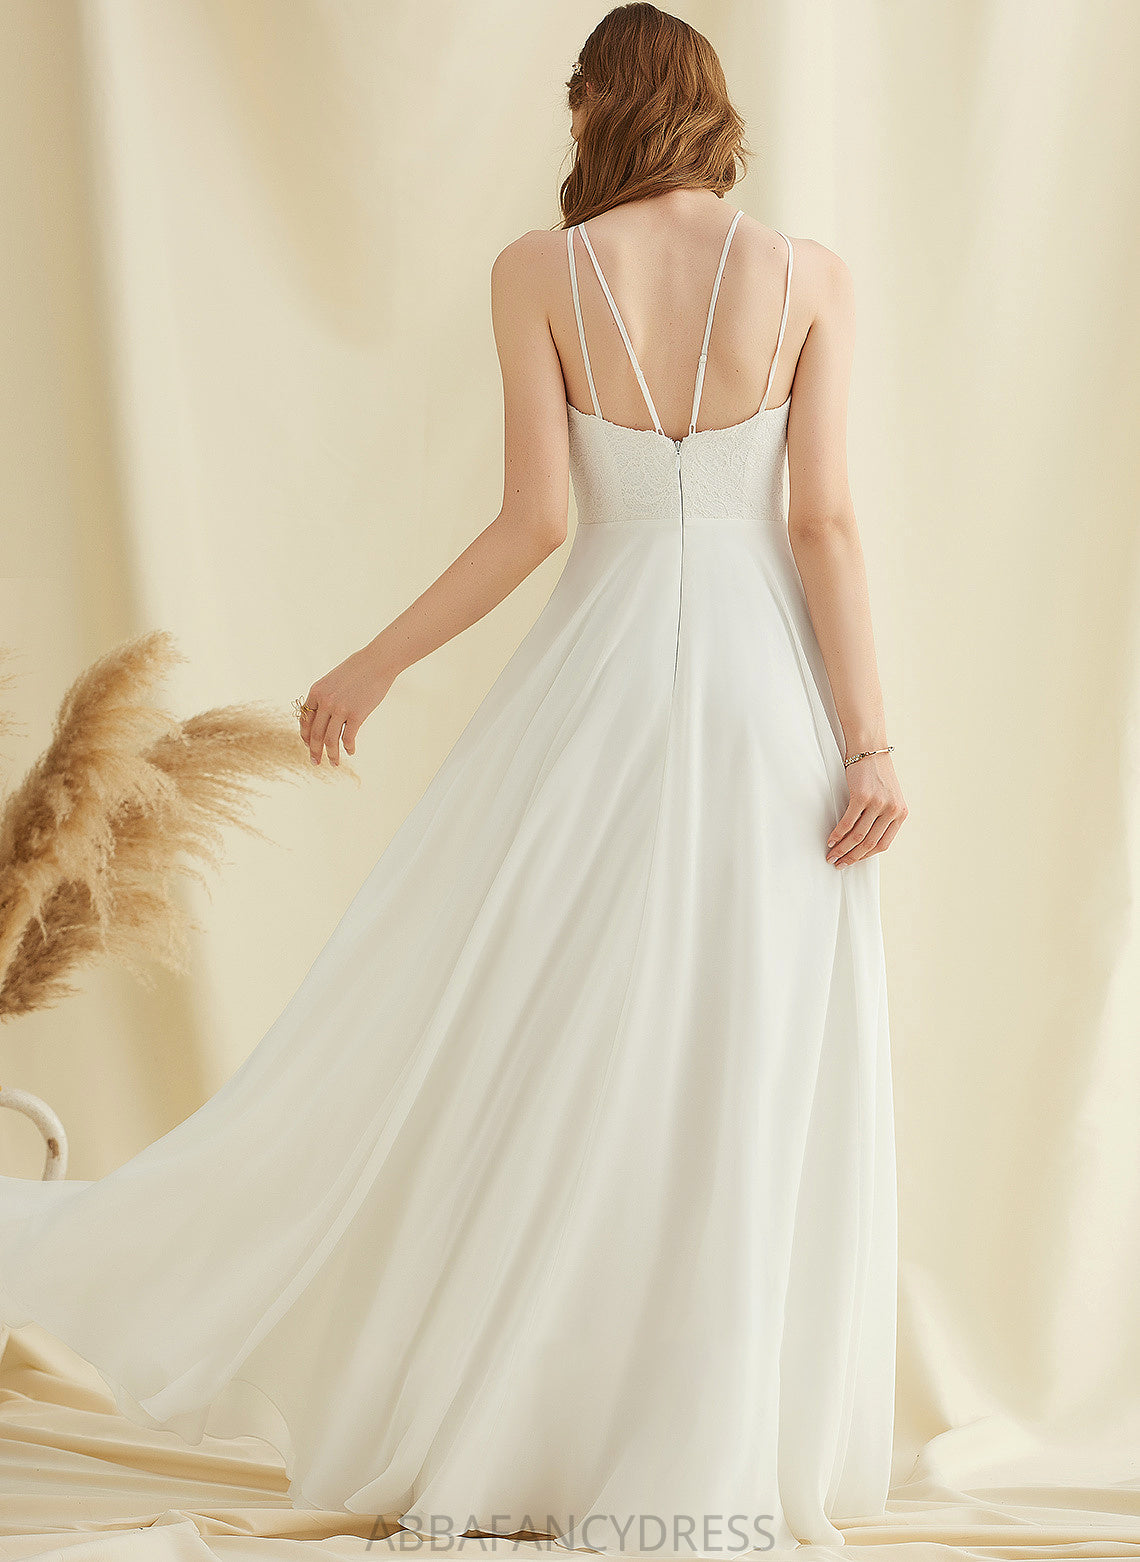 Dress Wedding Pockets Chiffon Floor-Length Sharon Lace A-Line Neck Wedding Dresses Scoop With